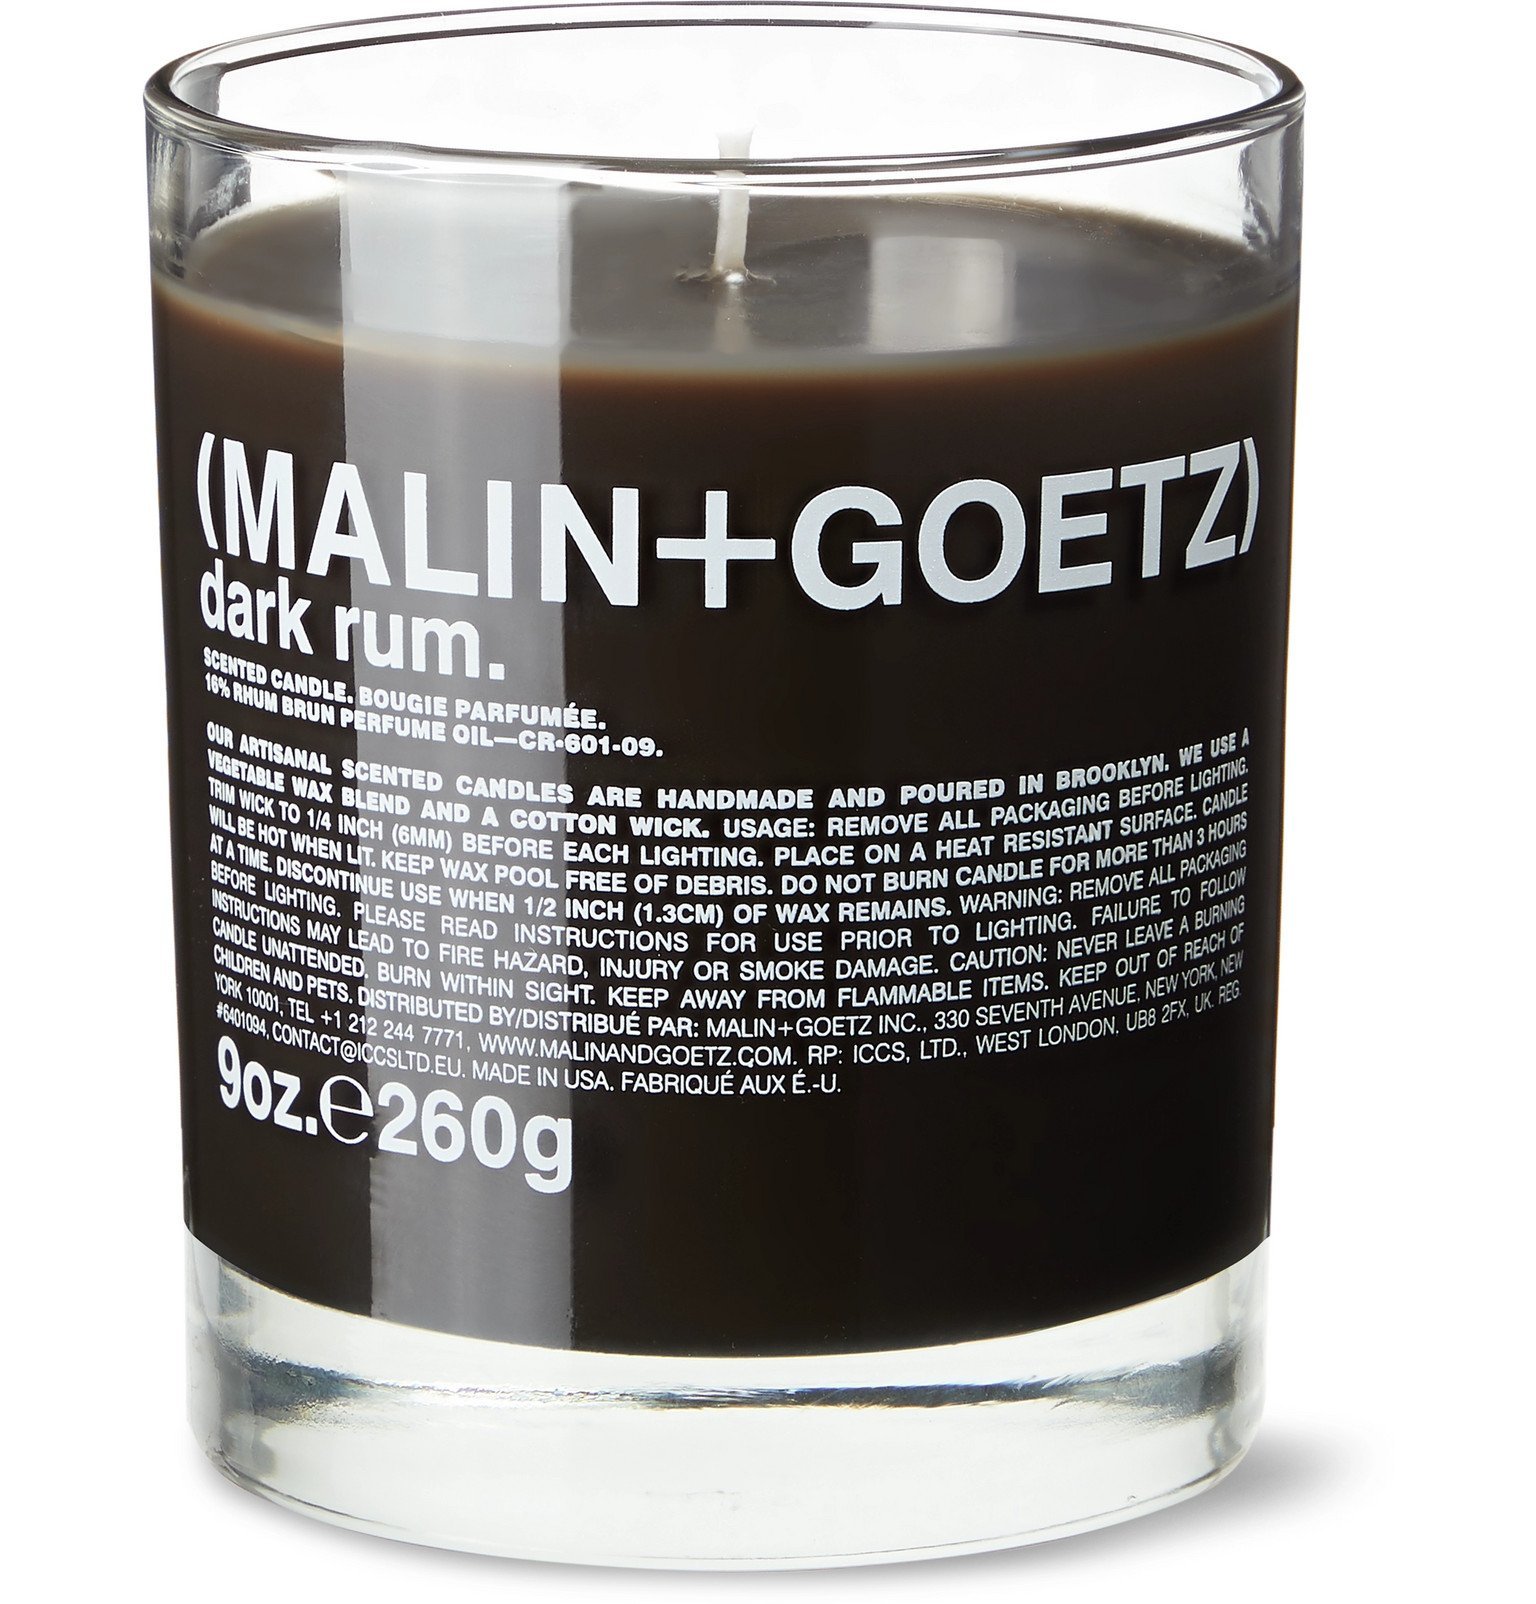 Malin Goetz - Dark Rum Candle, 260g - Colorless Malin + Goetz